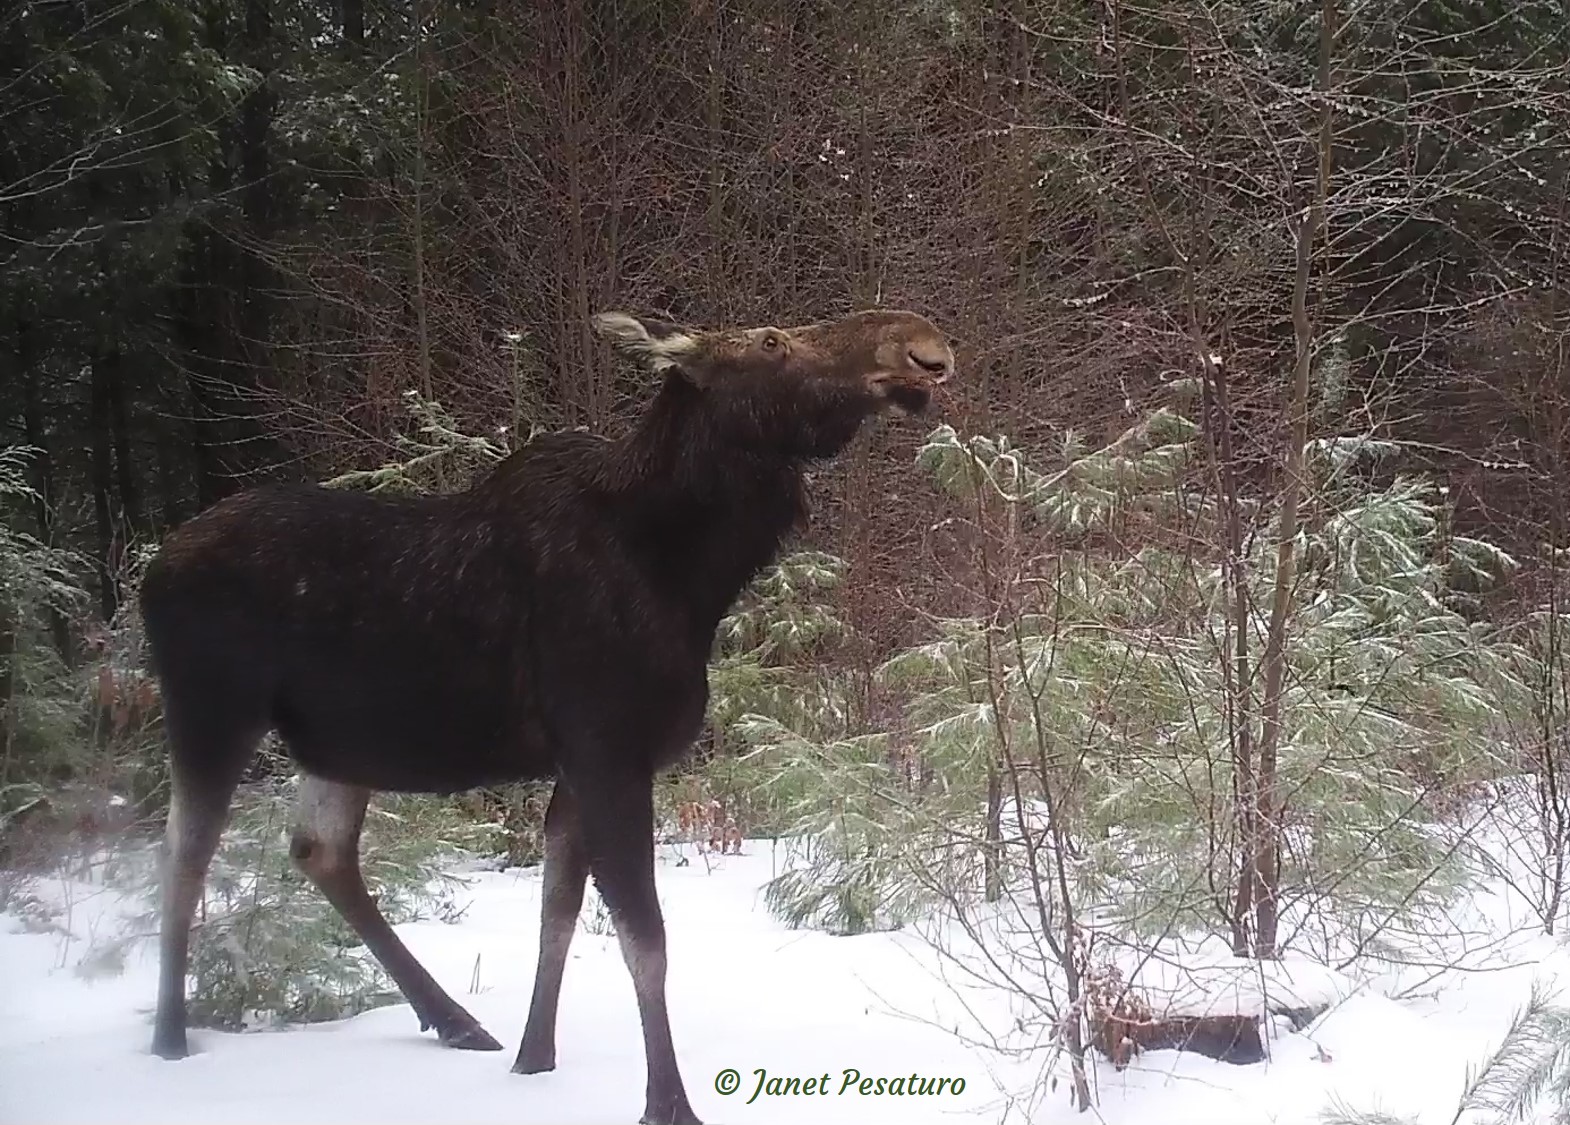 Moose browsing in winter